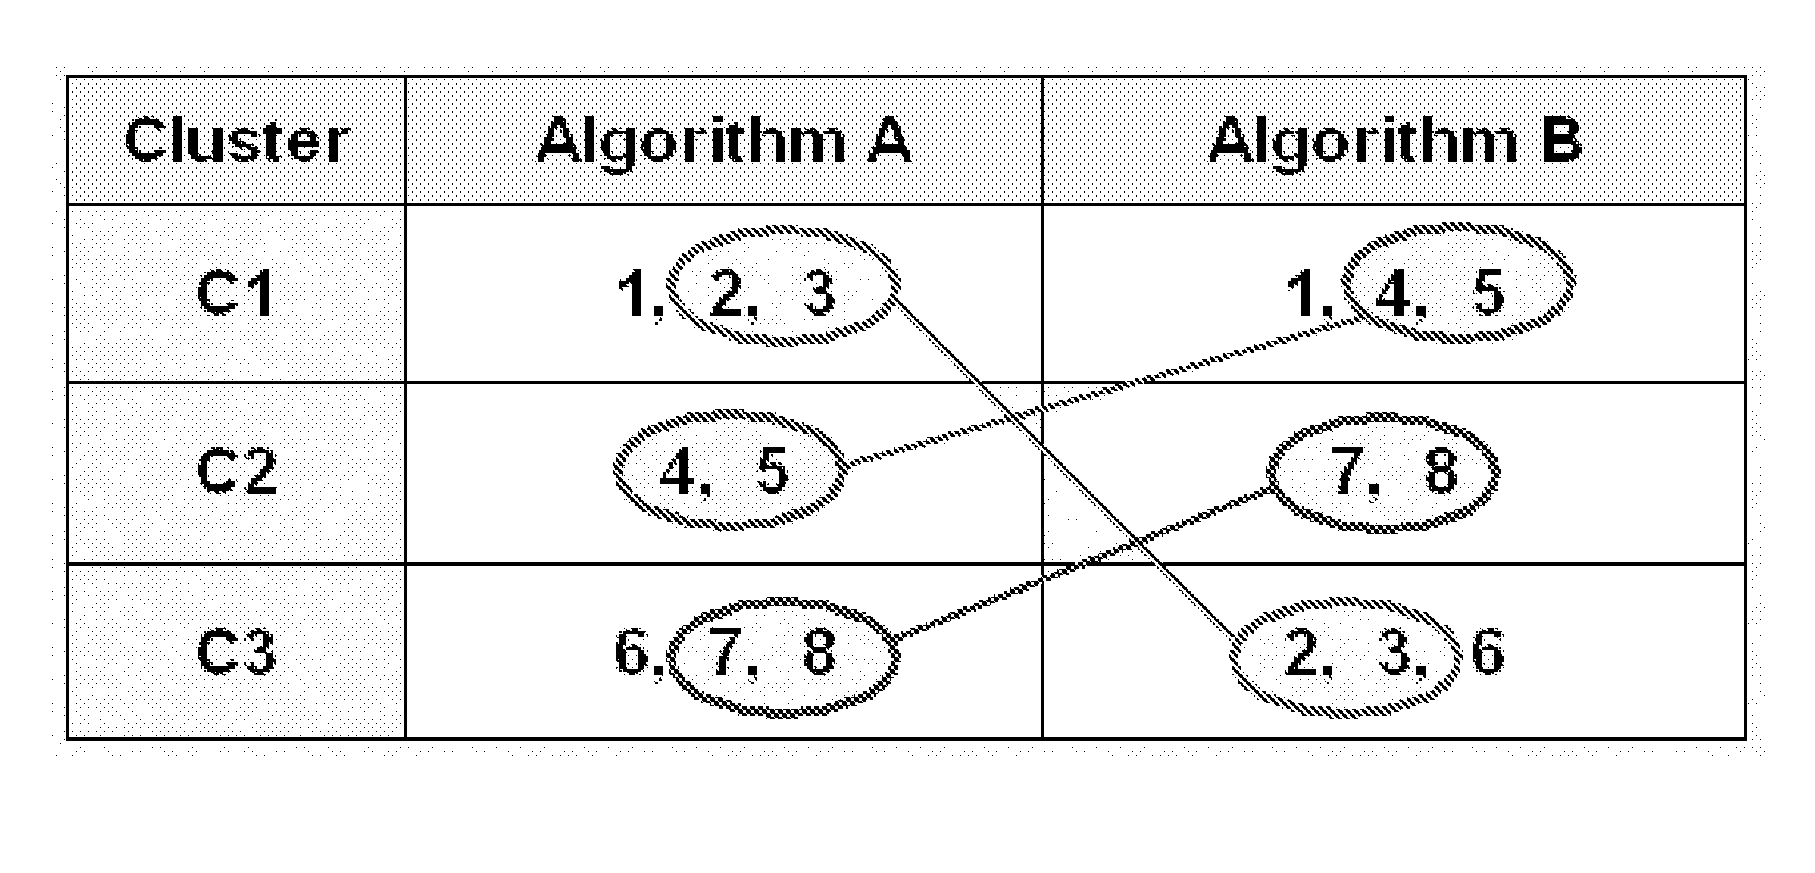 Method for efficient association of multiple distributions